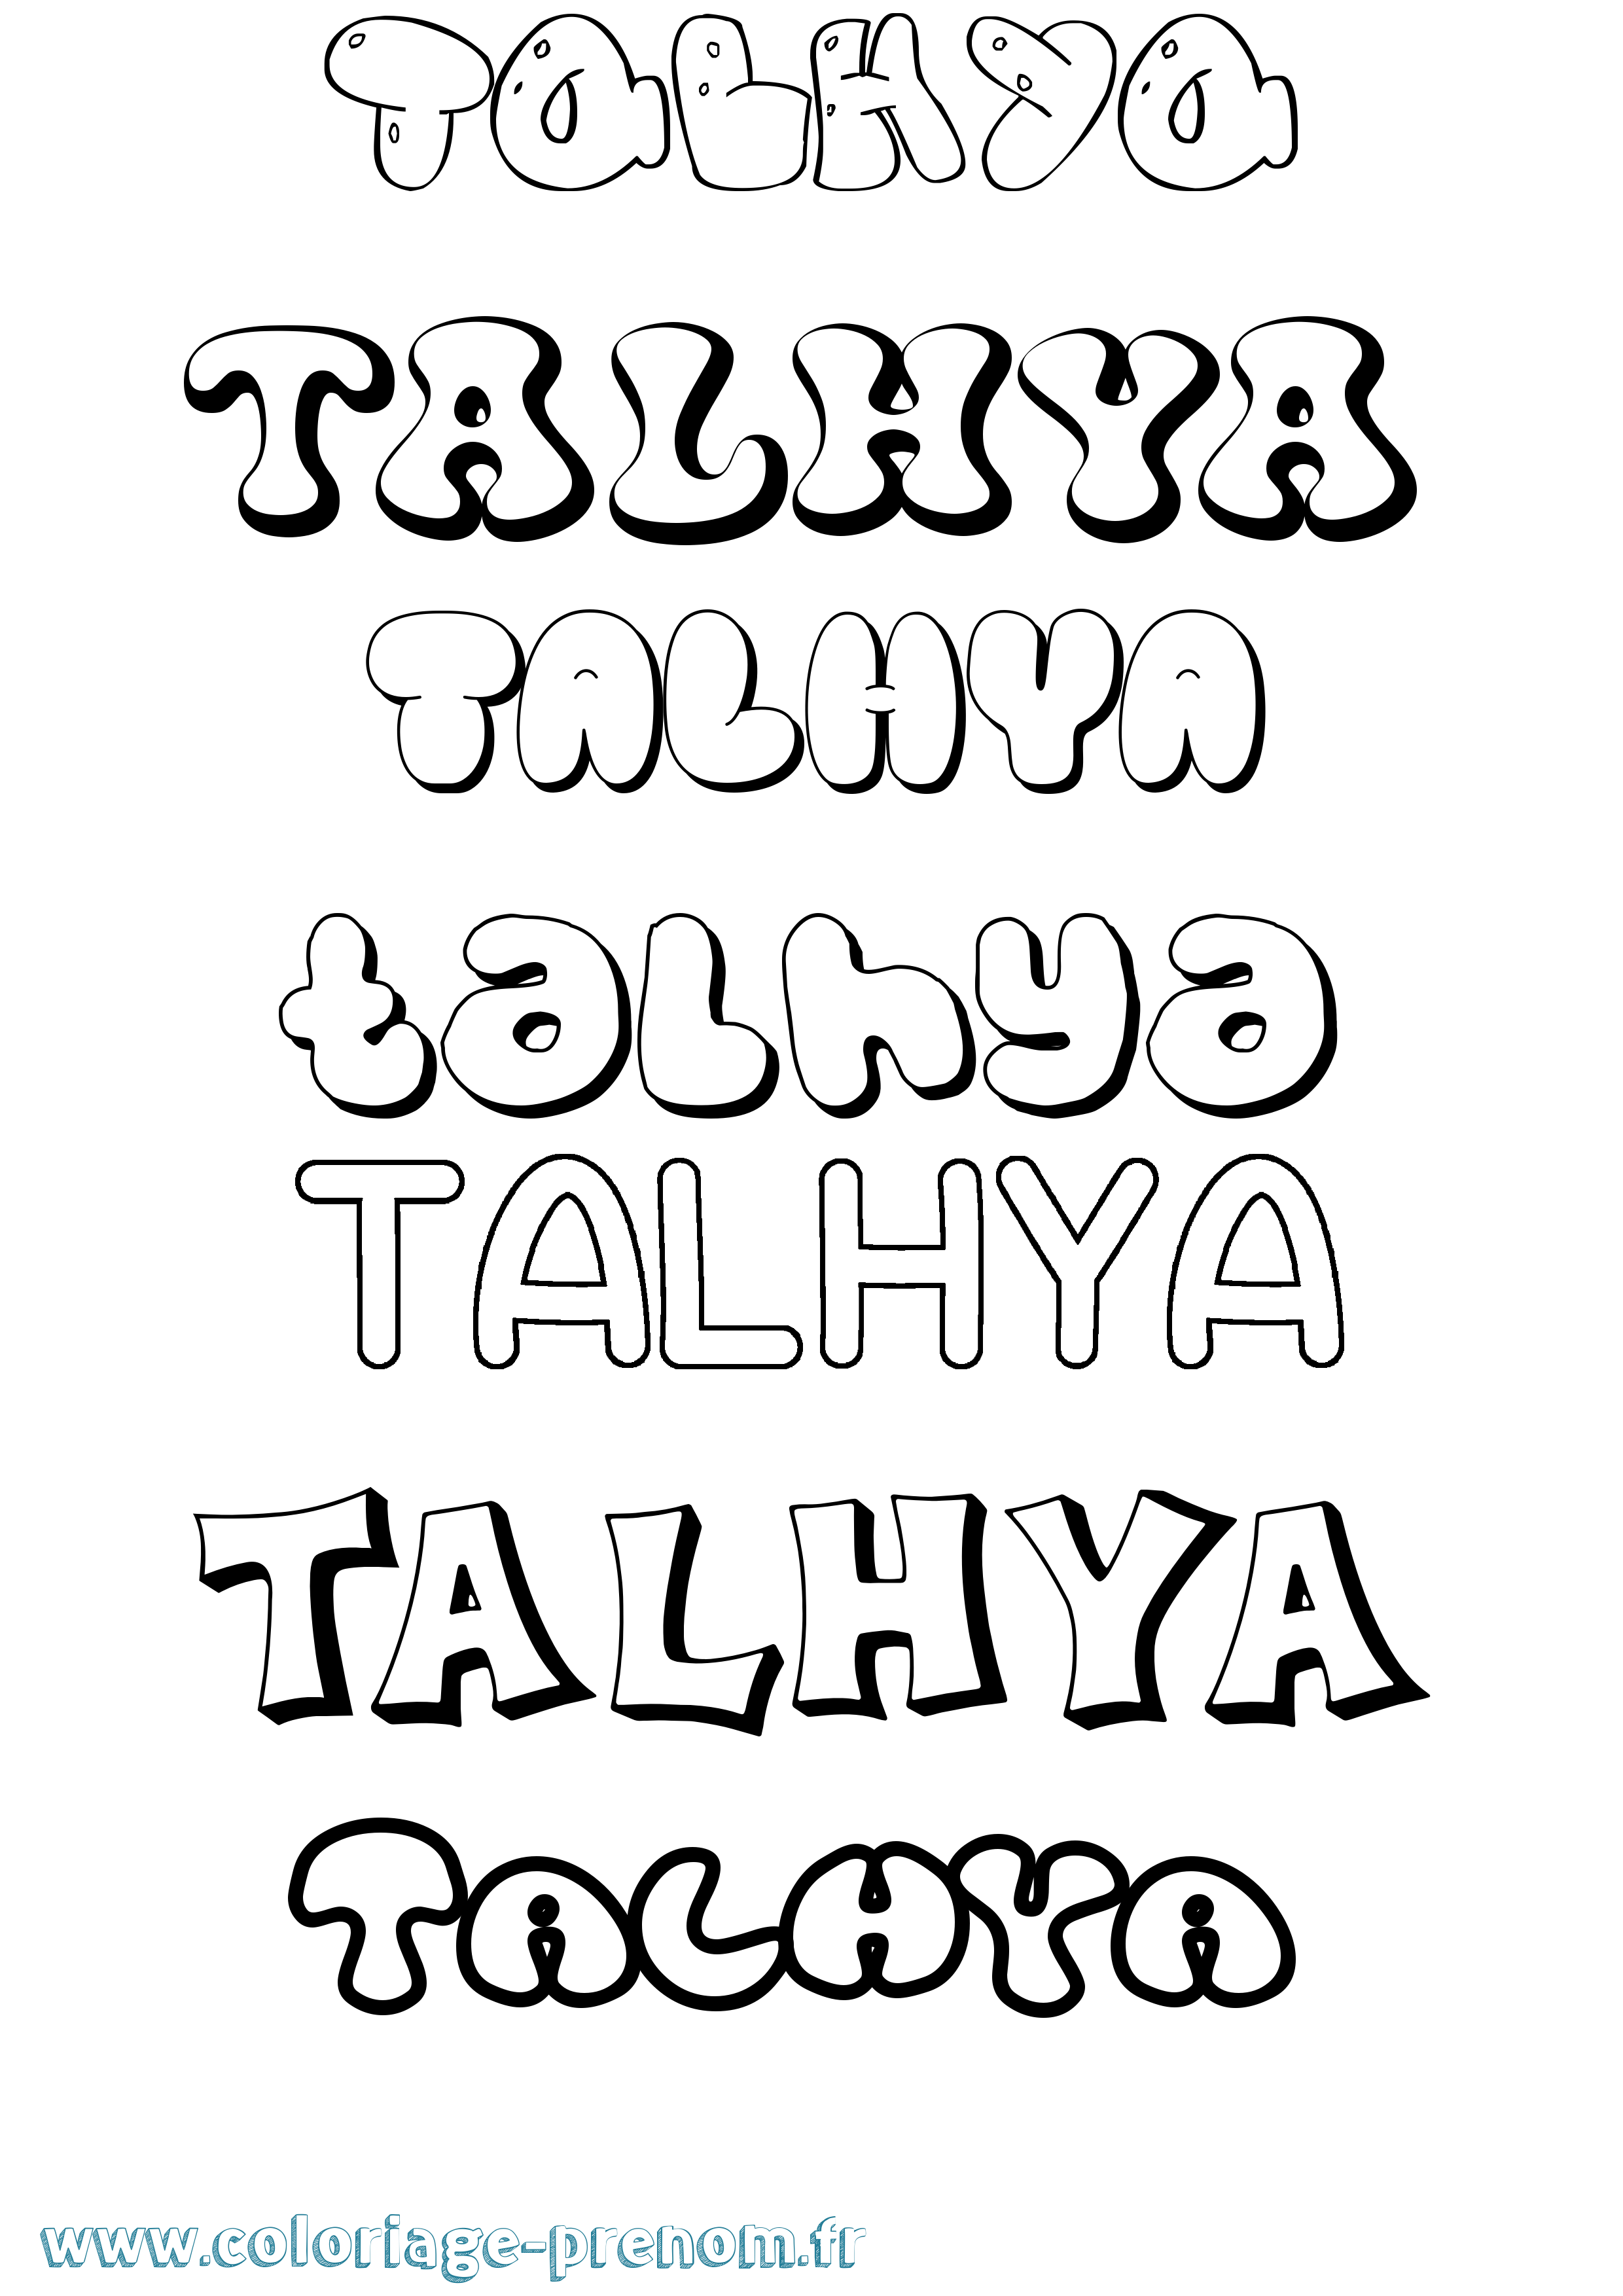 Coloriage prénom Talhya Bubble